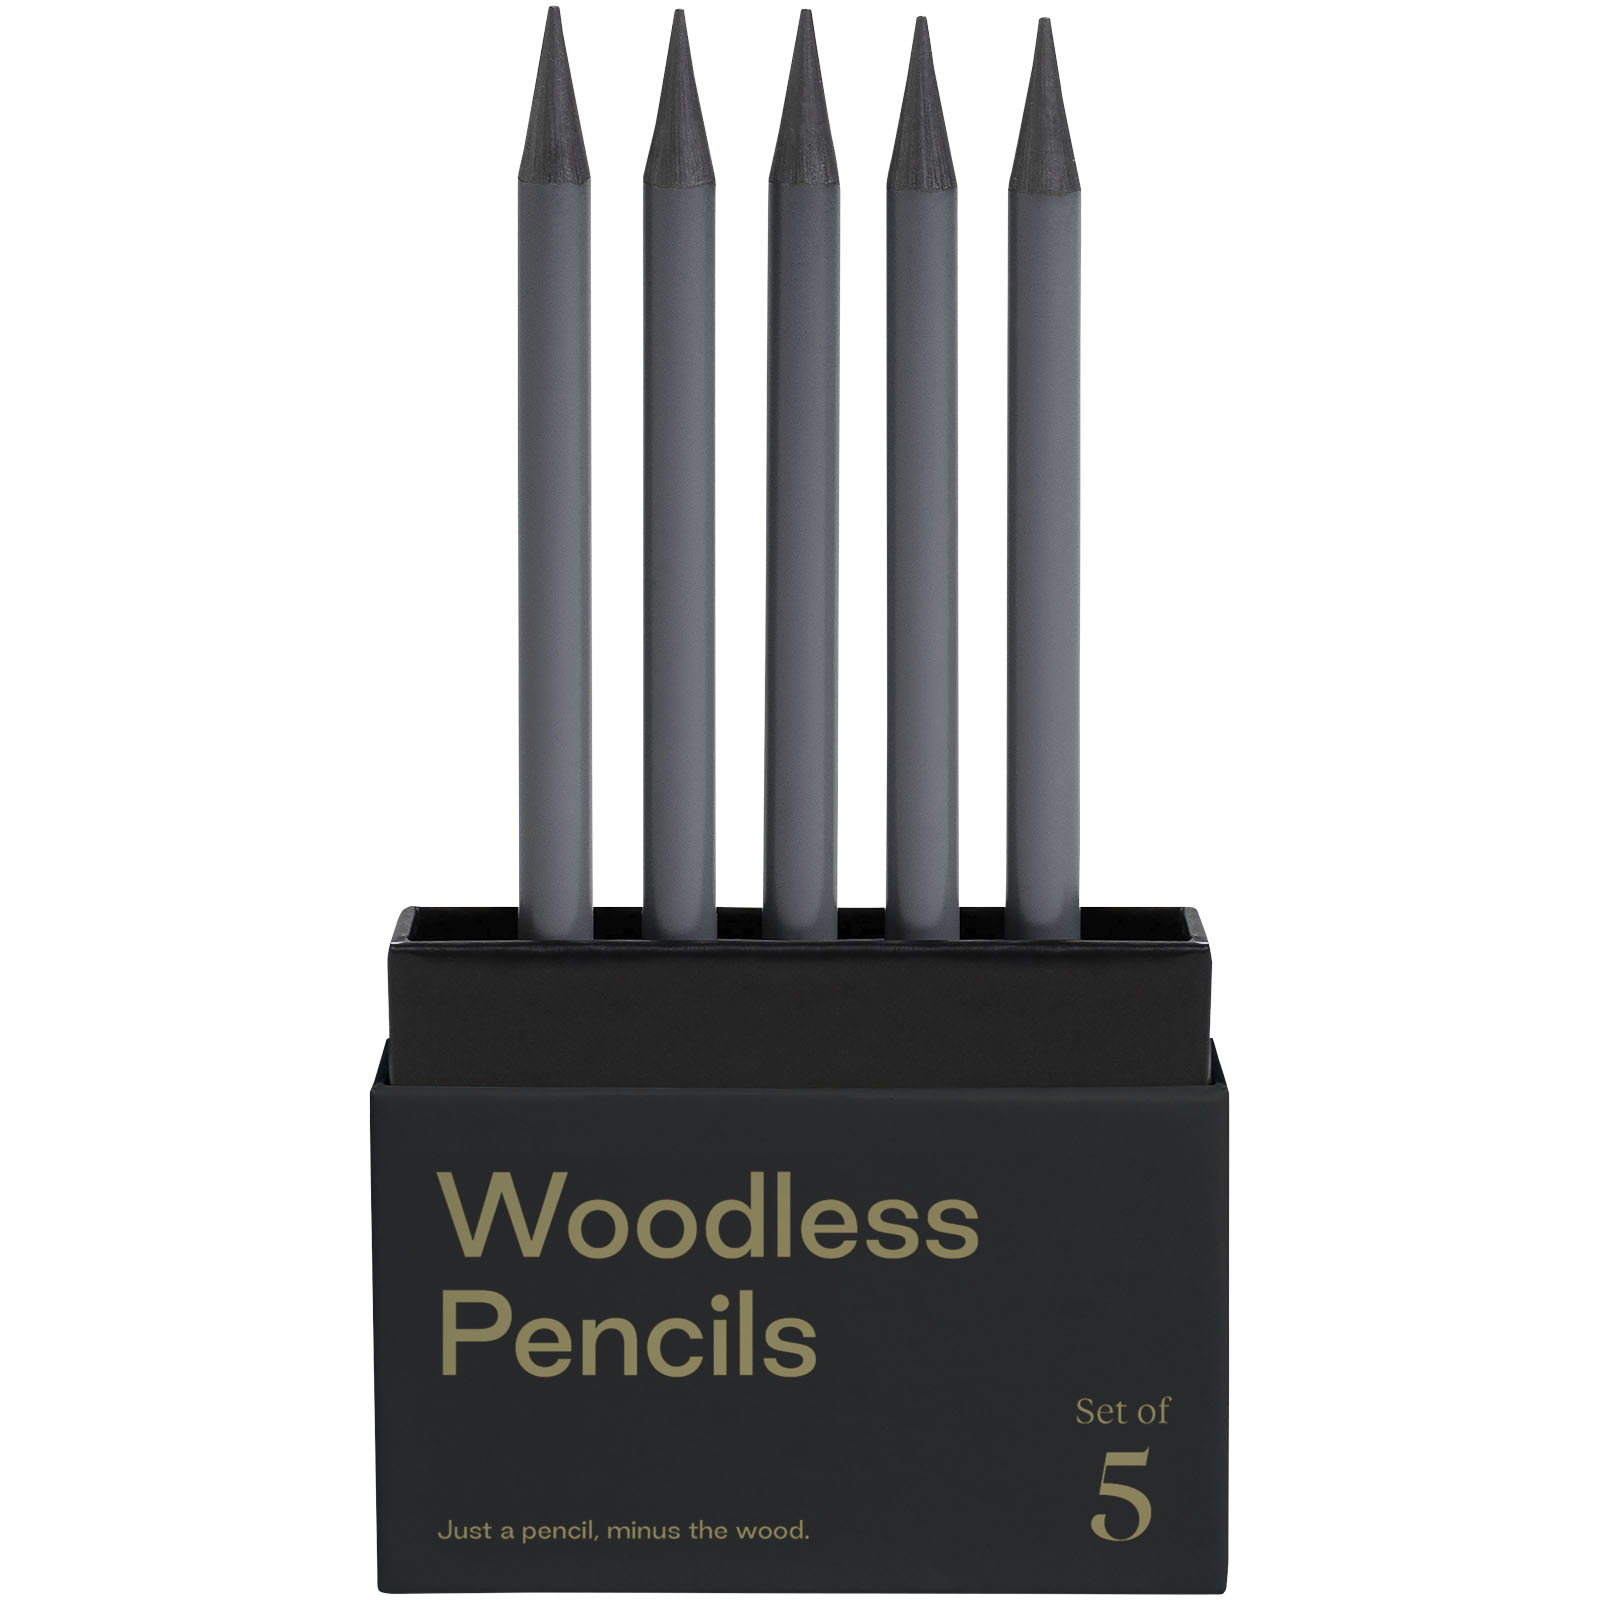 Advertising Pencils - Karst® 5-pack 2B woodless graphite pencils - 2